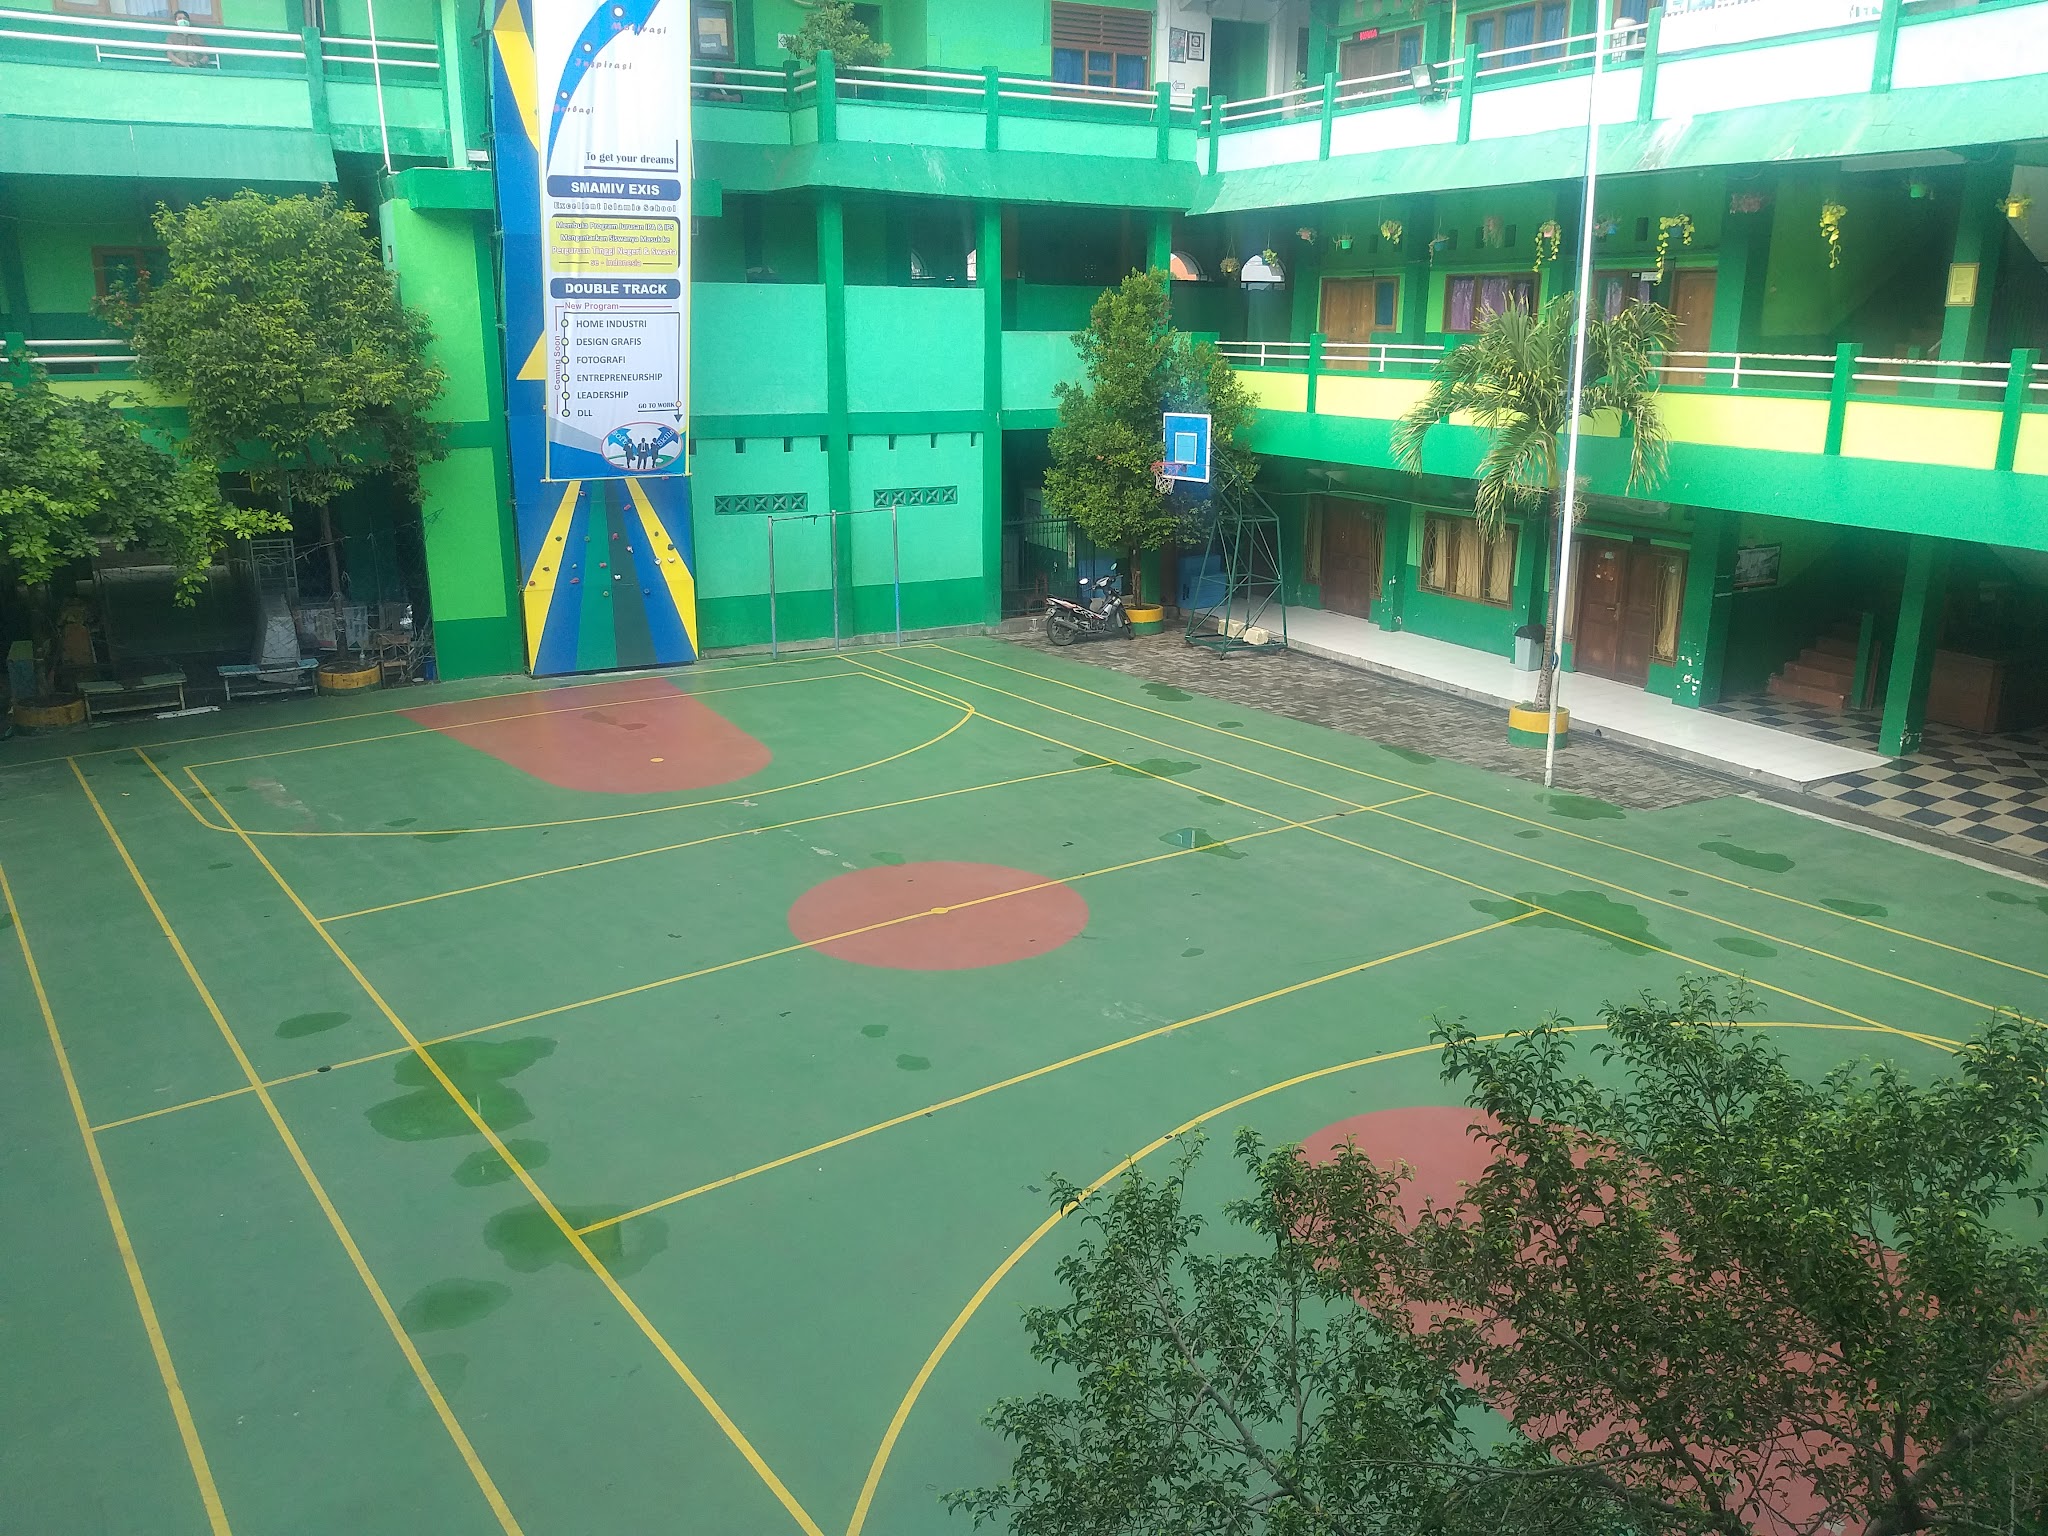 Foto SMA  Muhammadiyah 4 Surabaya, Kota Surabaya